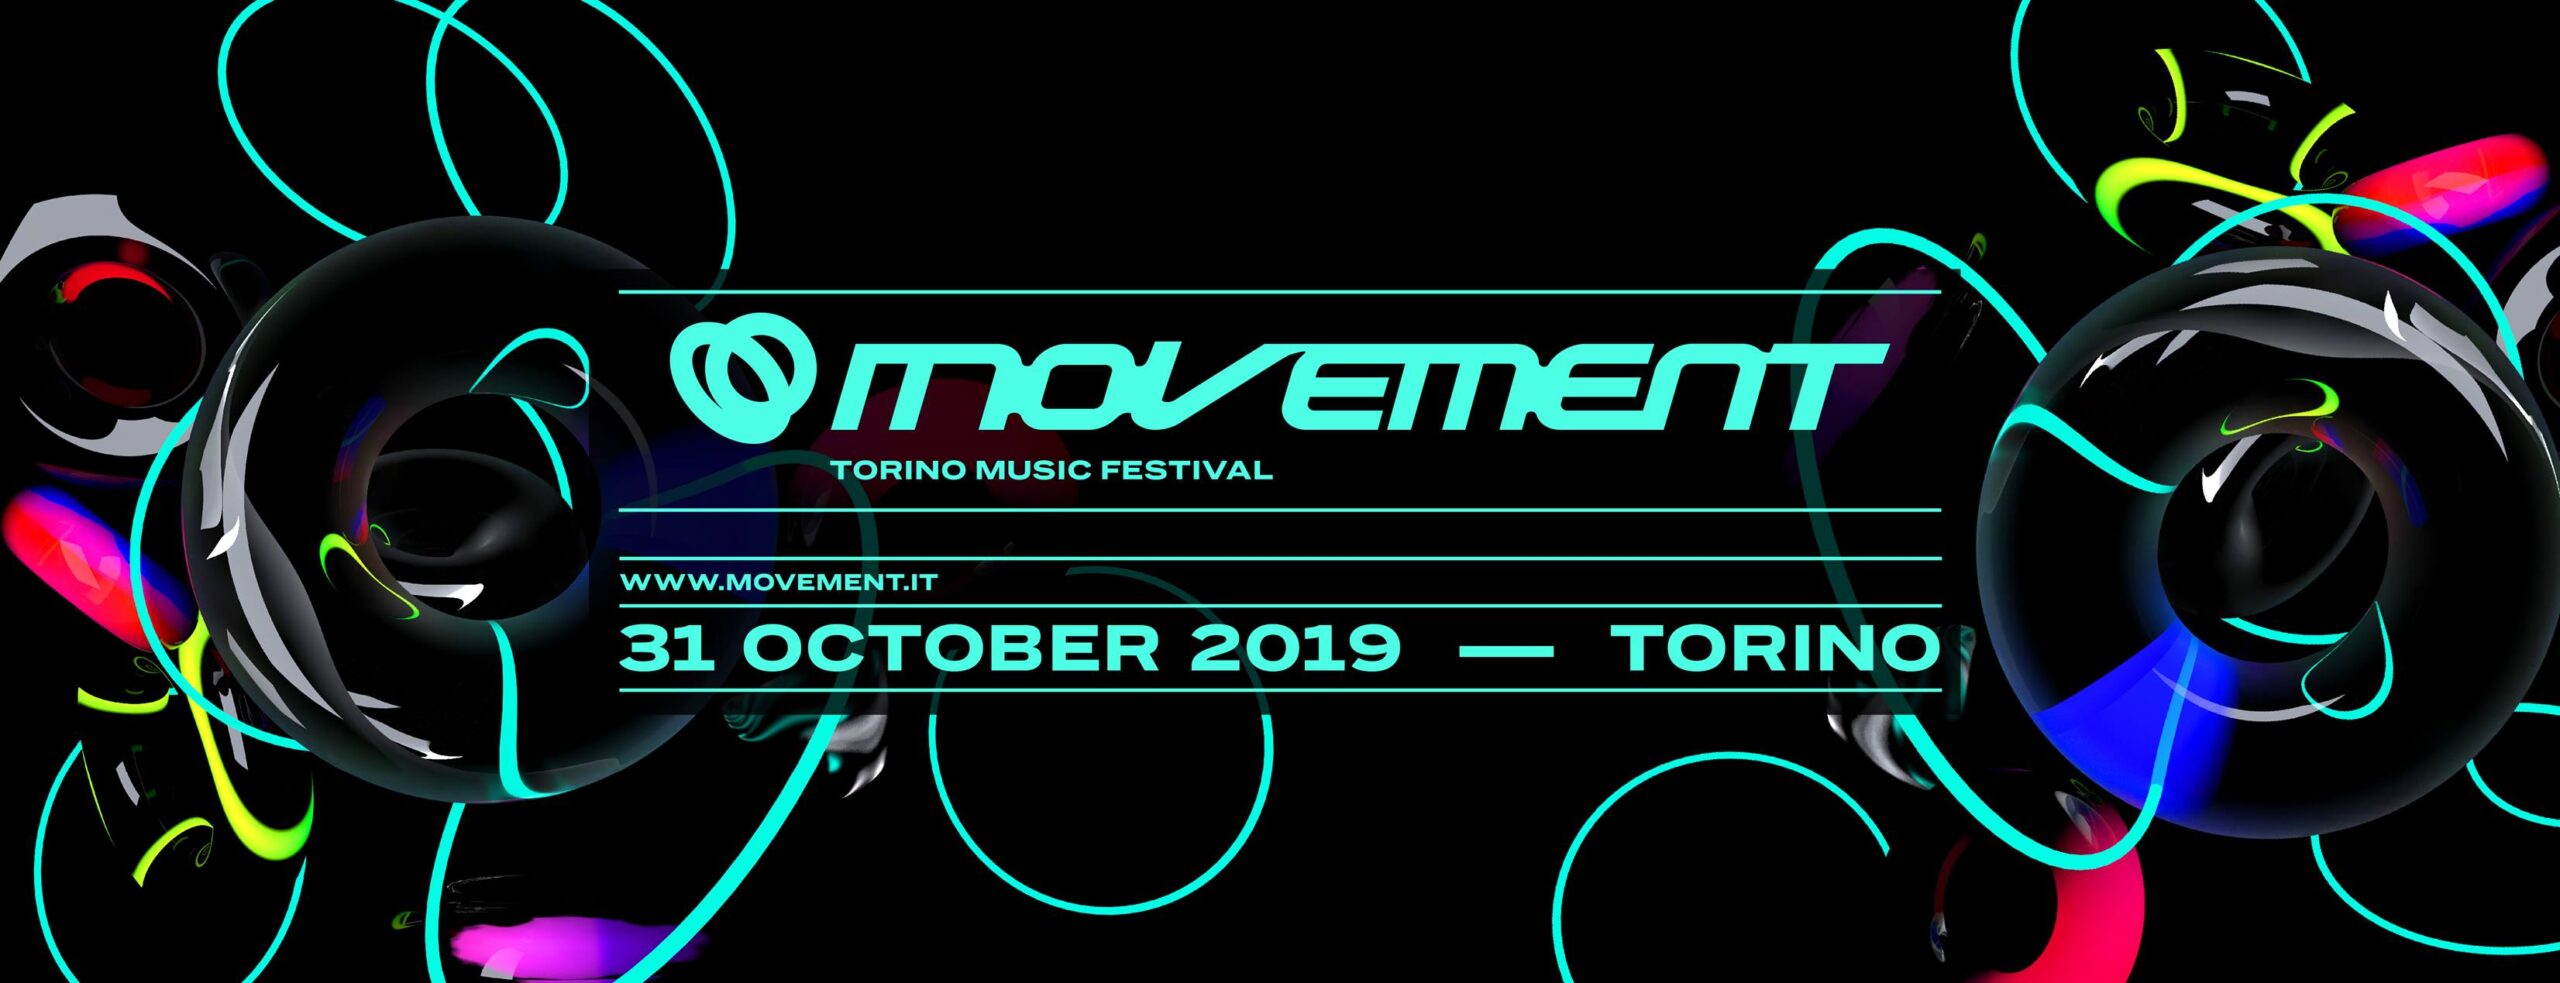 Movement Torino Music Festival 2019